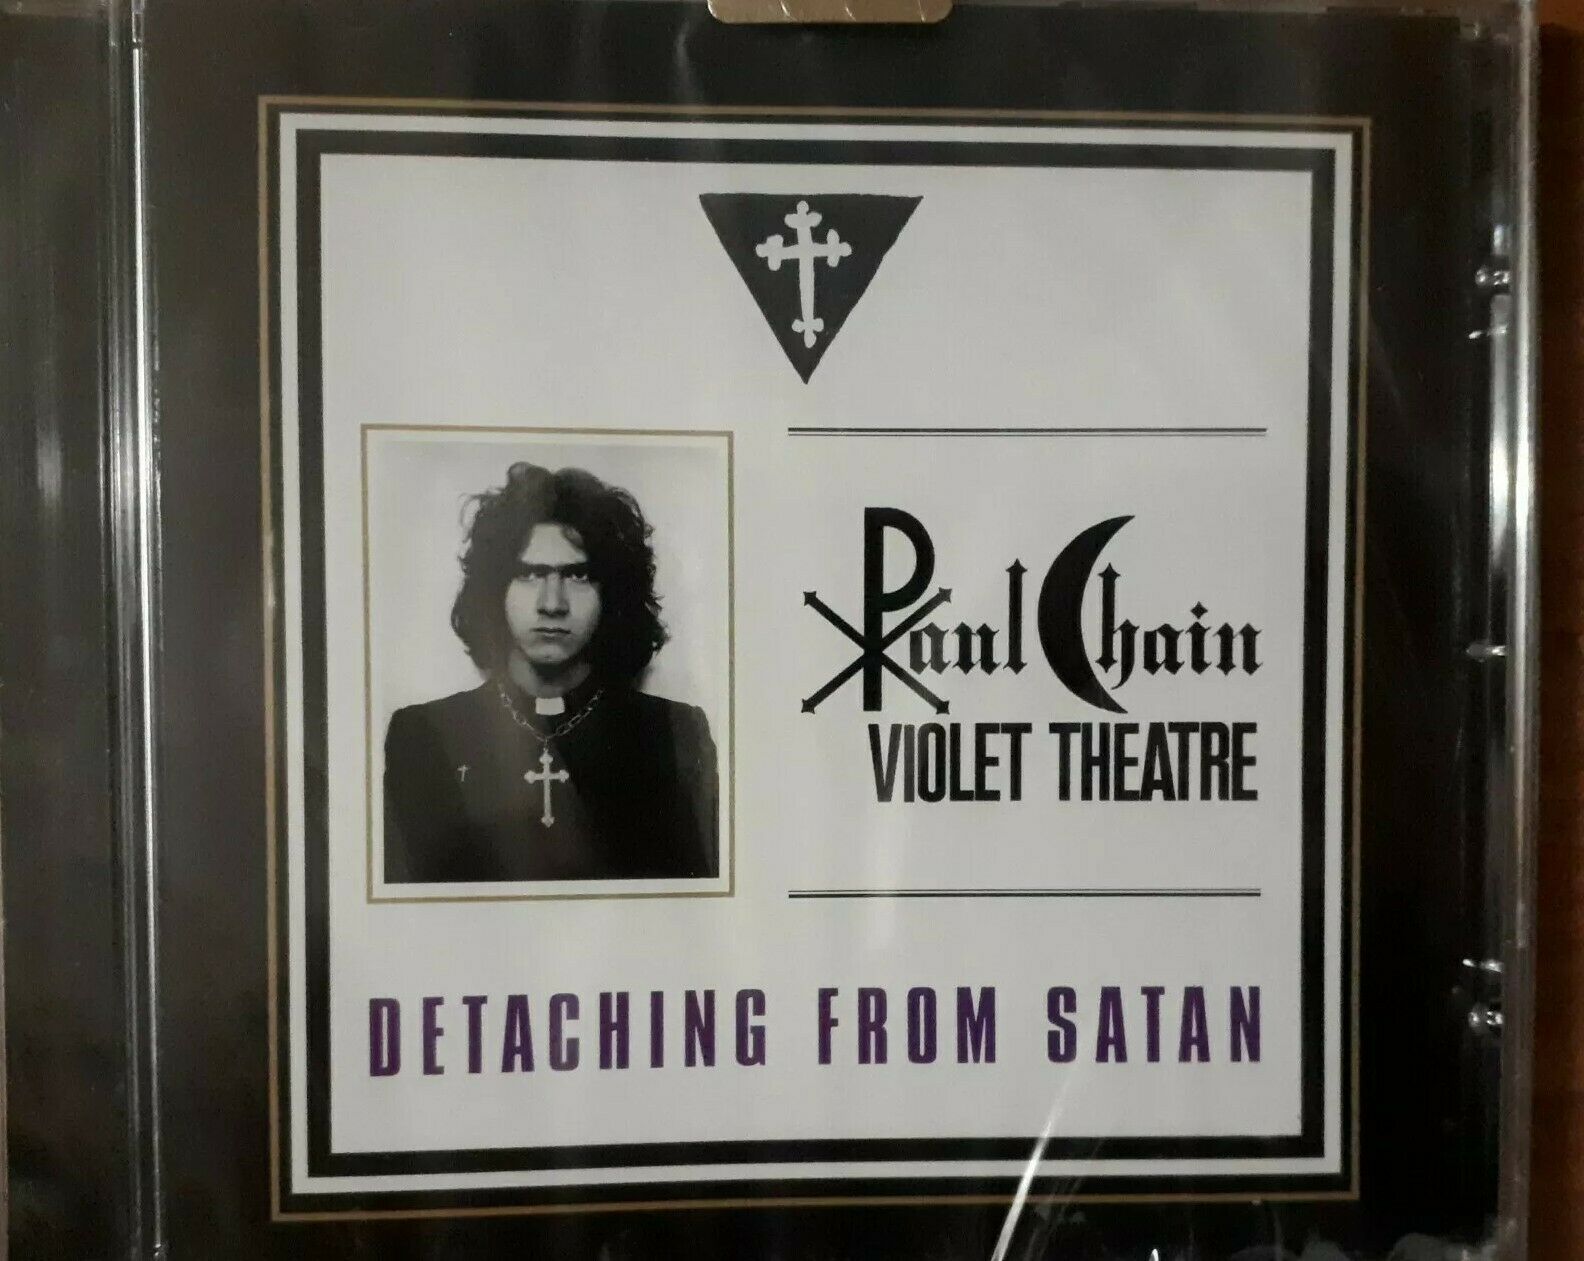 Paul Chain Violet Theatre - Detaching from Satan